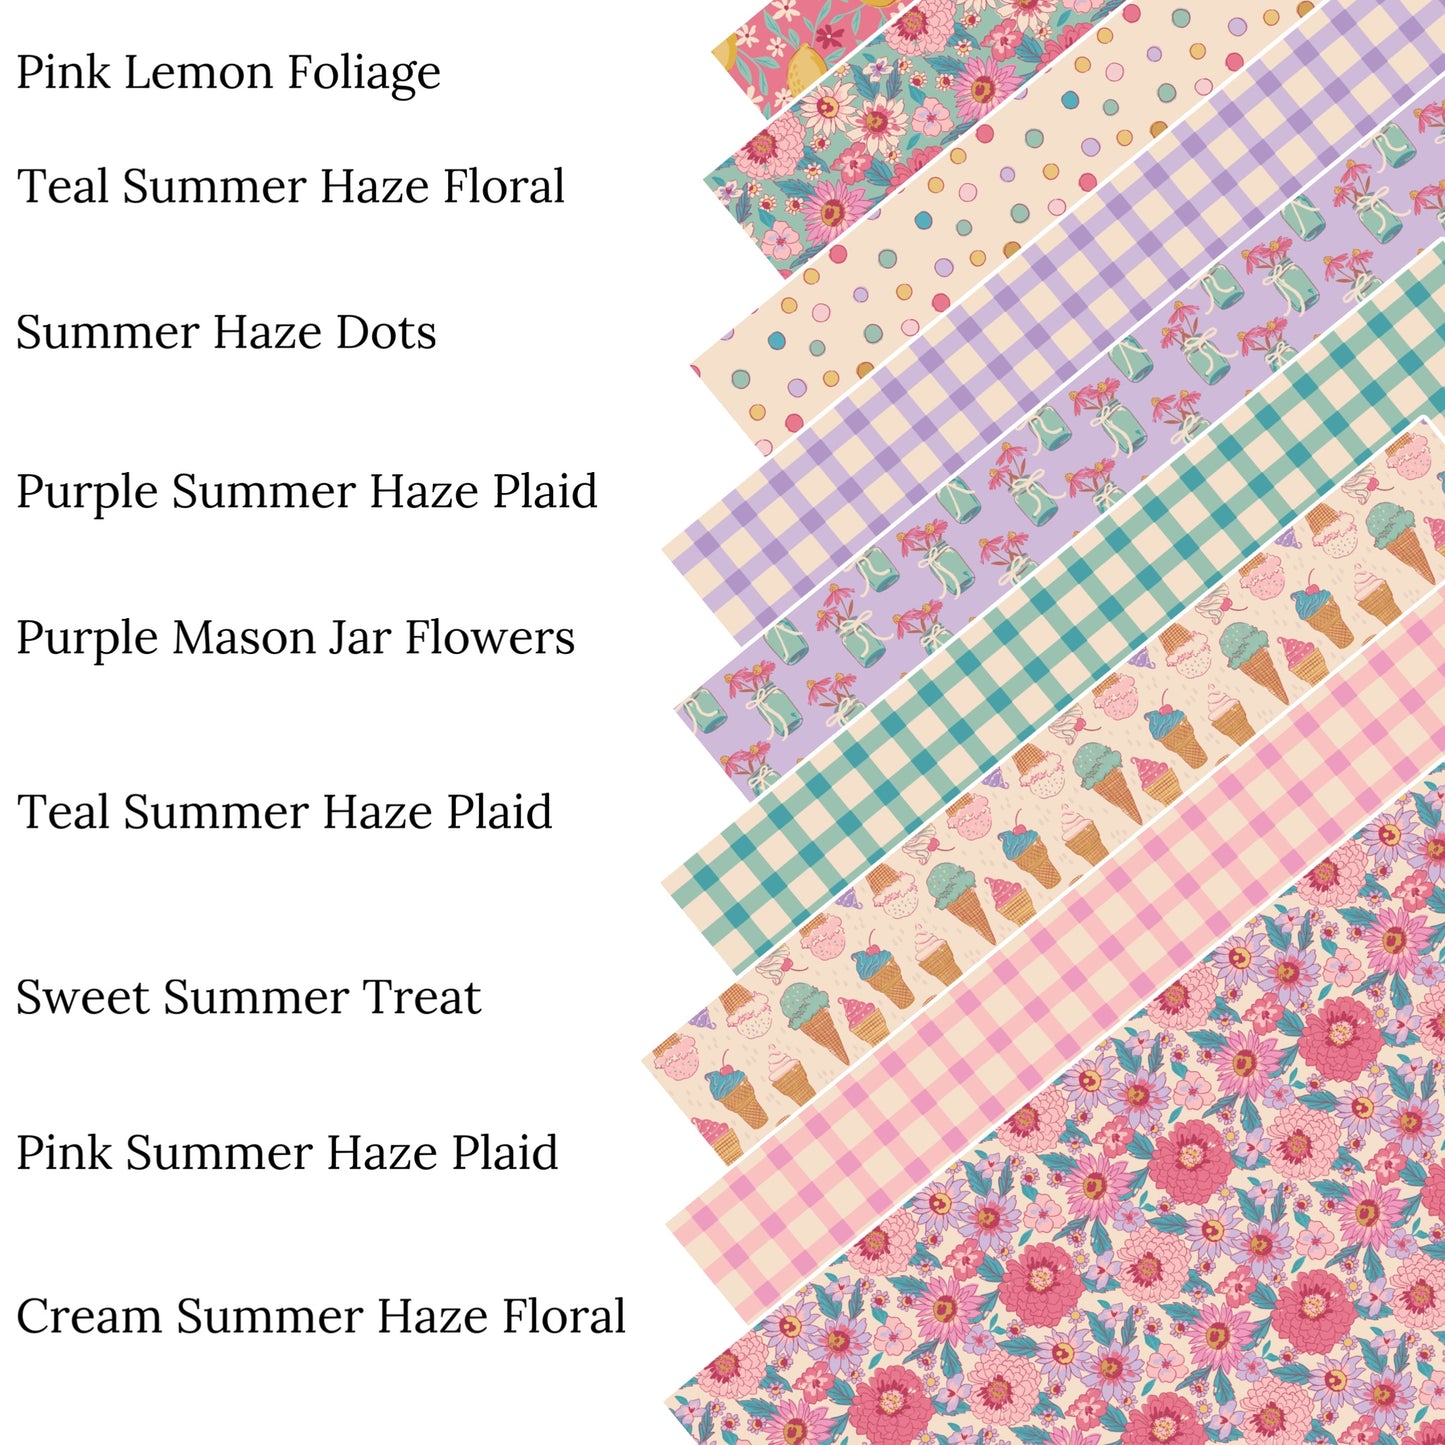 Cream Summer Haze Floral Faux Leather Sheets